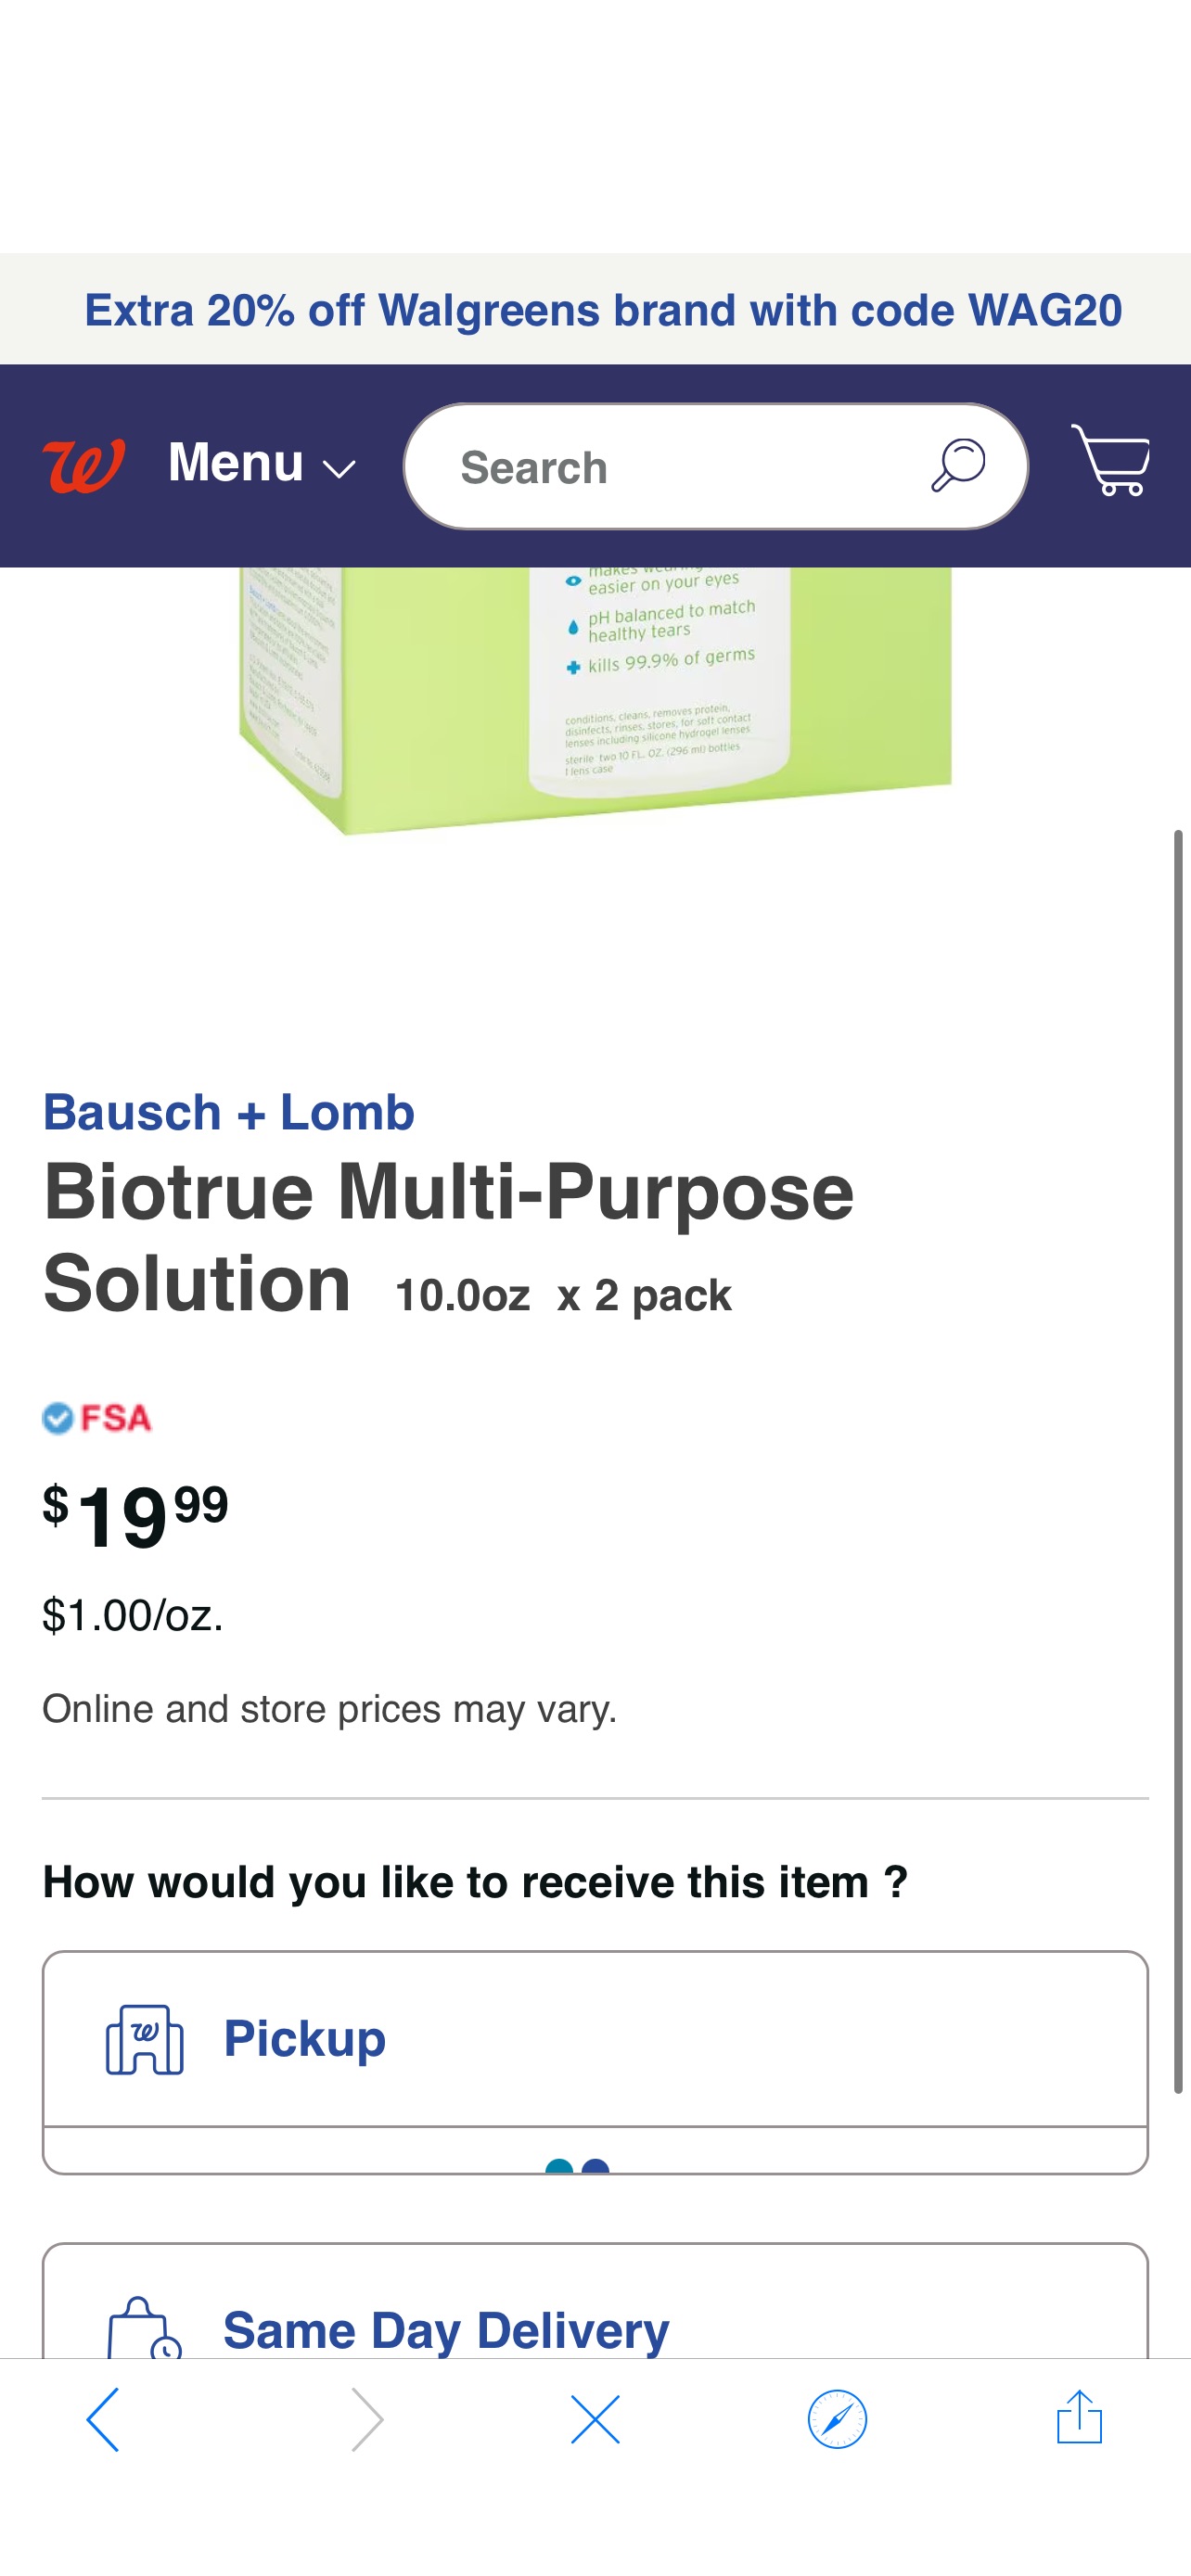 Bausch + Lomb Biotrue Multi-Purpose Solution | Walgreens